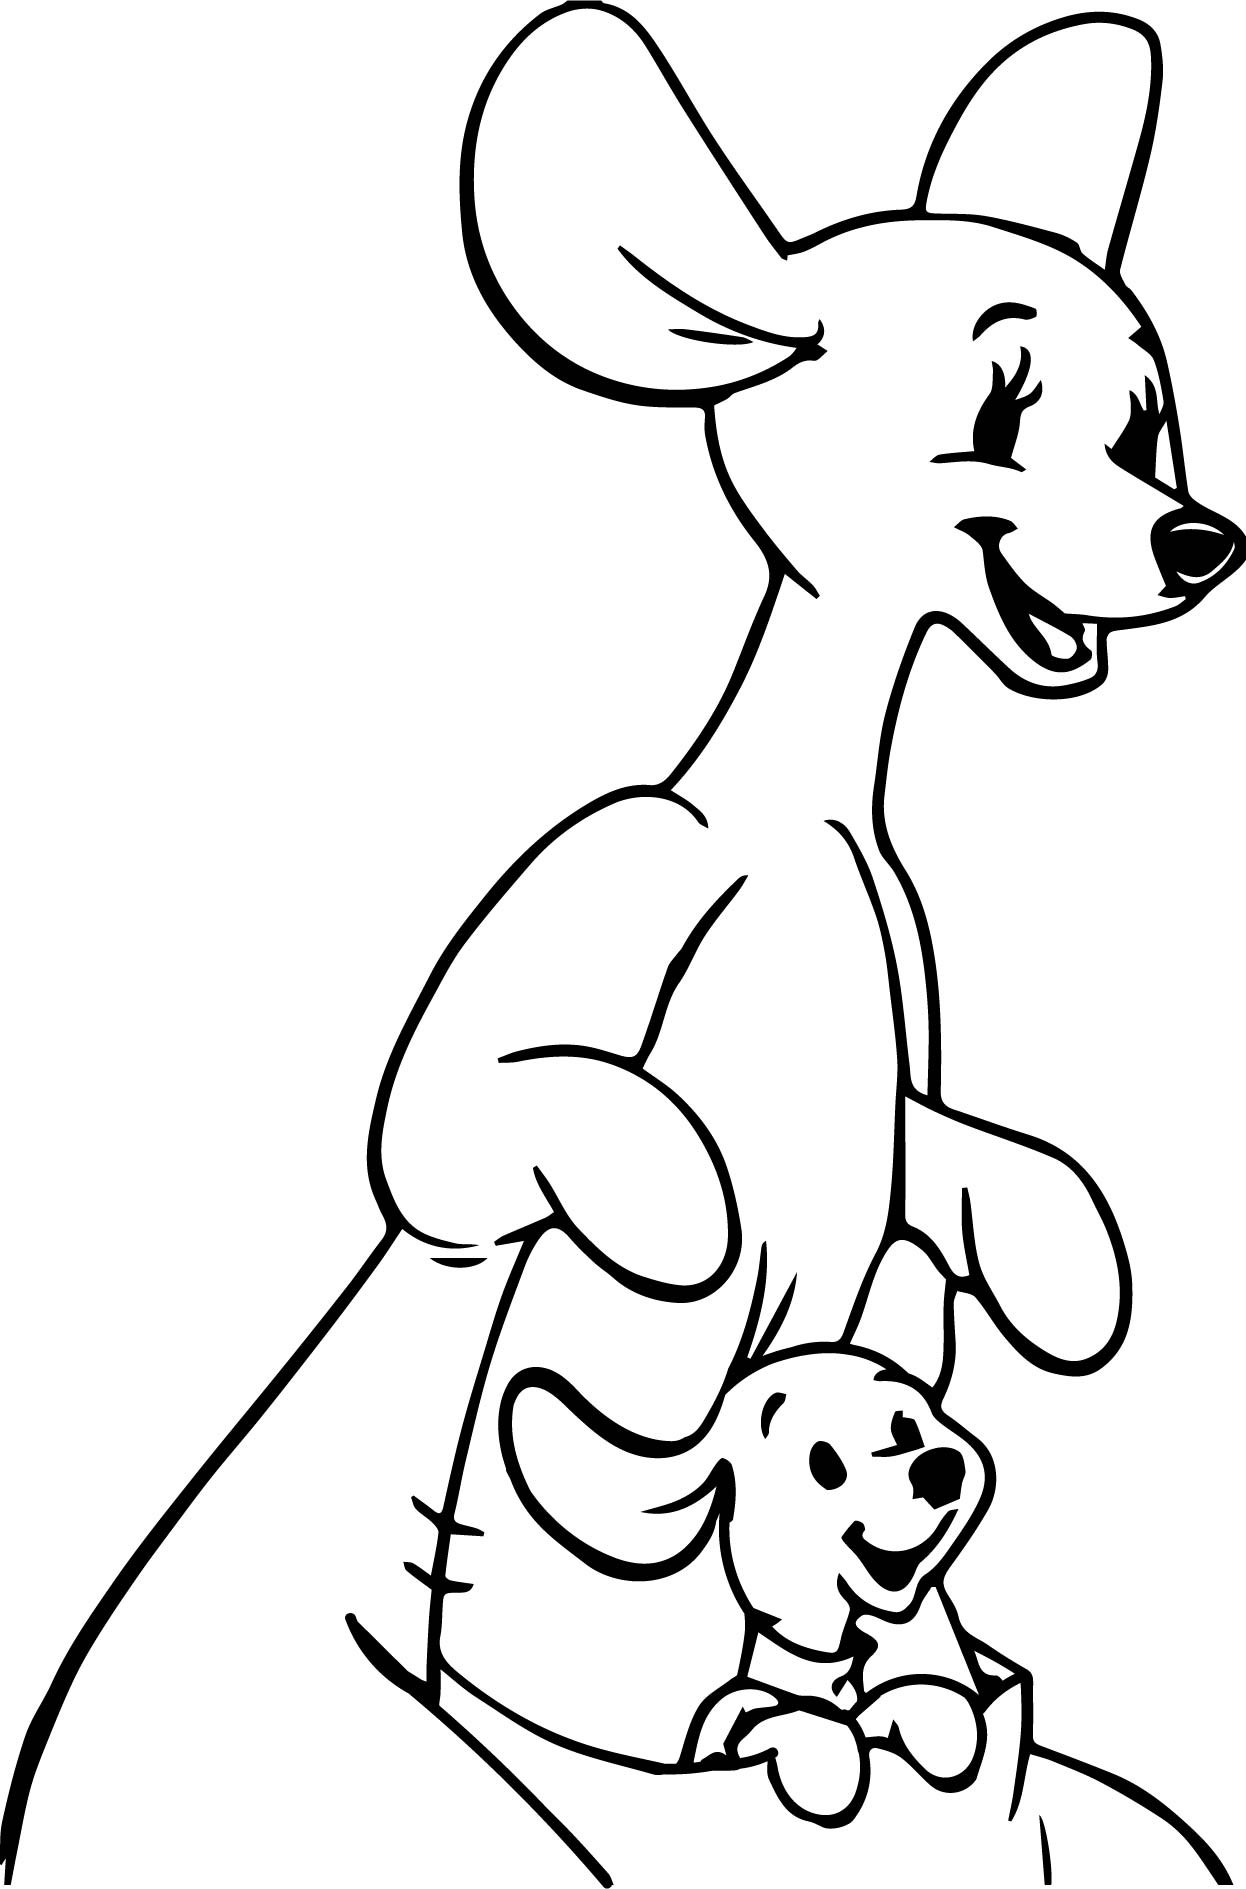 Baby Kangaroo Coloring Page
 Winnie The Pooh Kangaroo Coloring Page